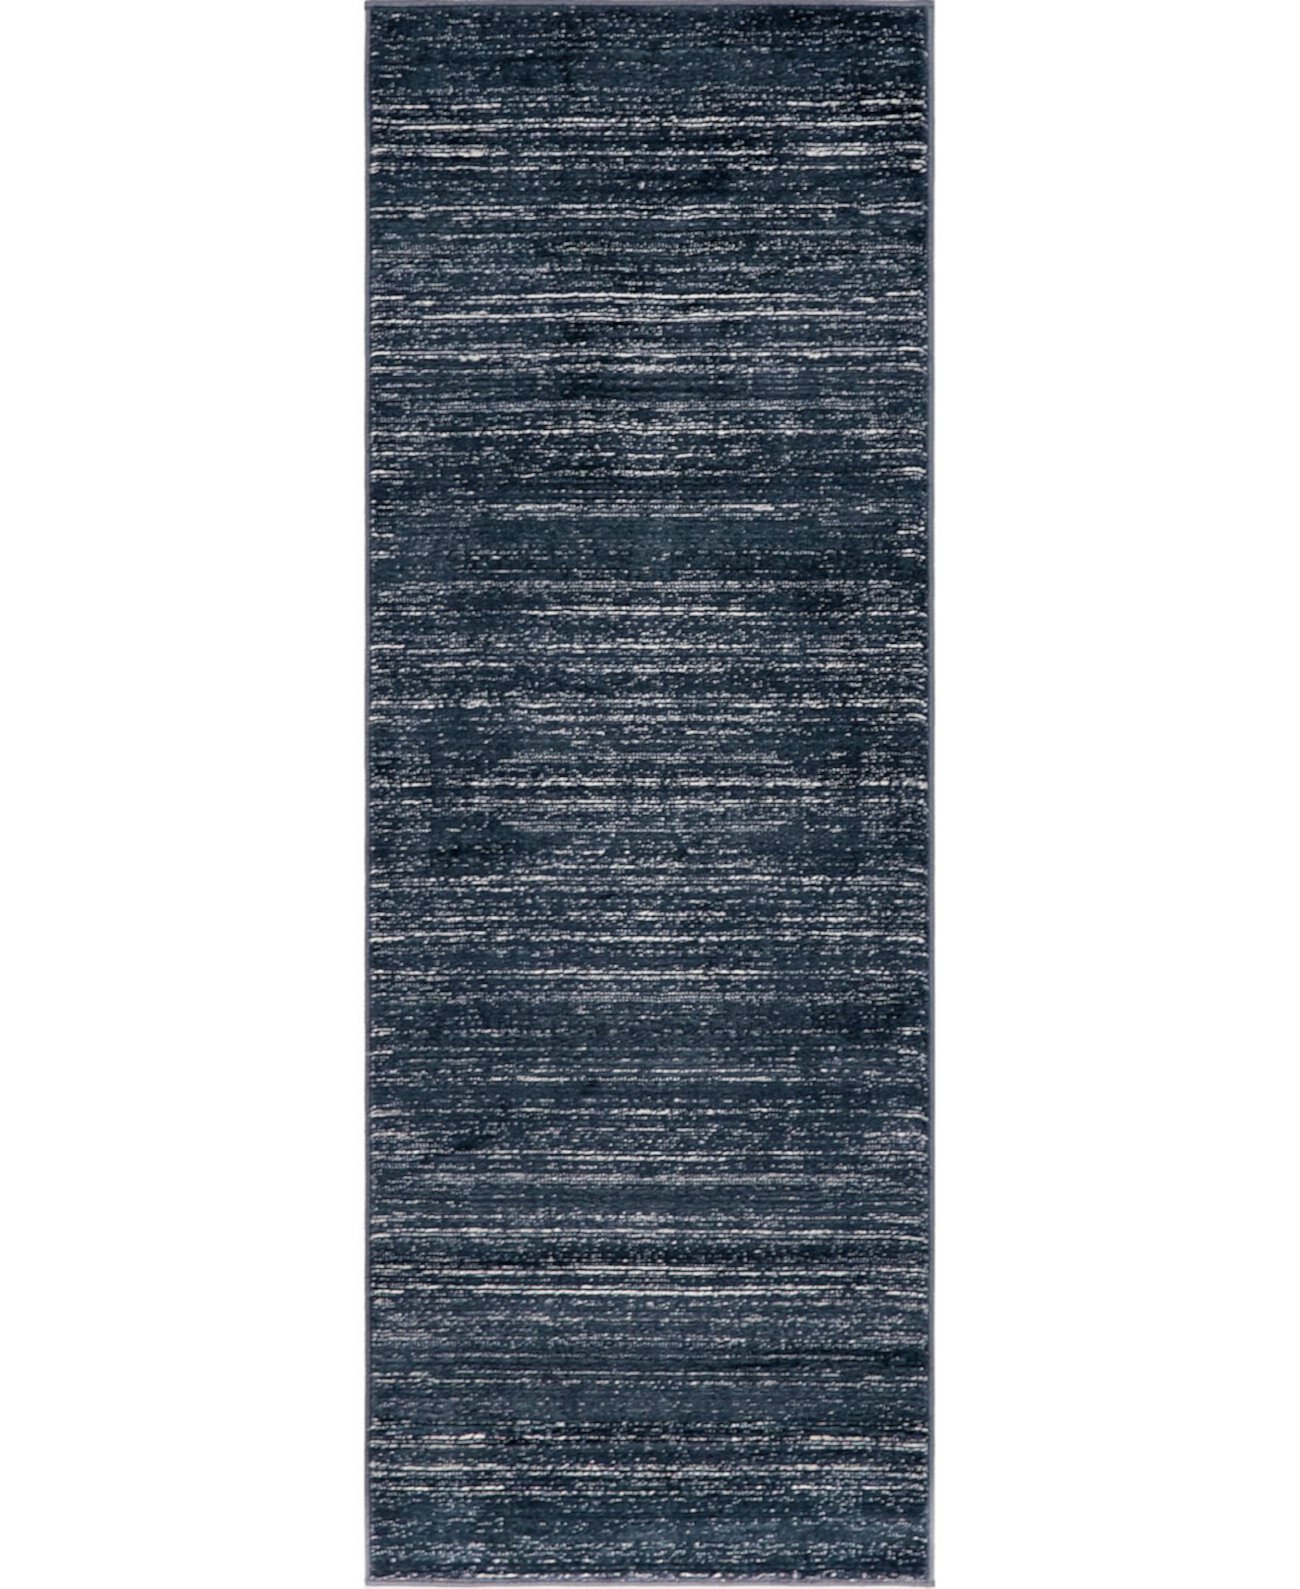 Madison Avenue Uptown Jzu001 Темно-синий коврик размером 2 х 6 футов (2 фута 2 дюйма) Jill Zarin